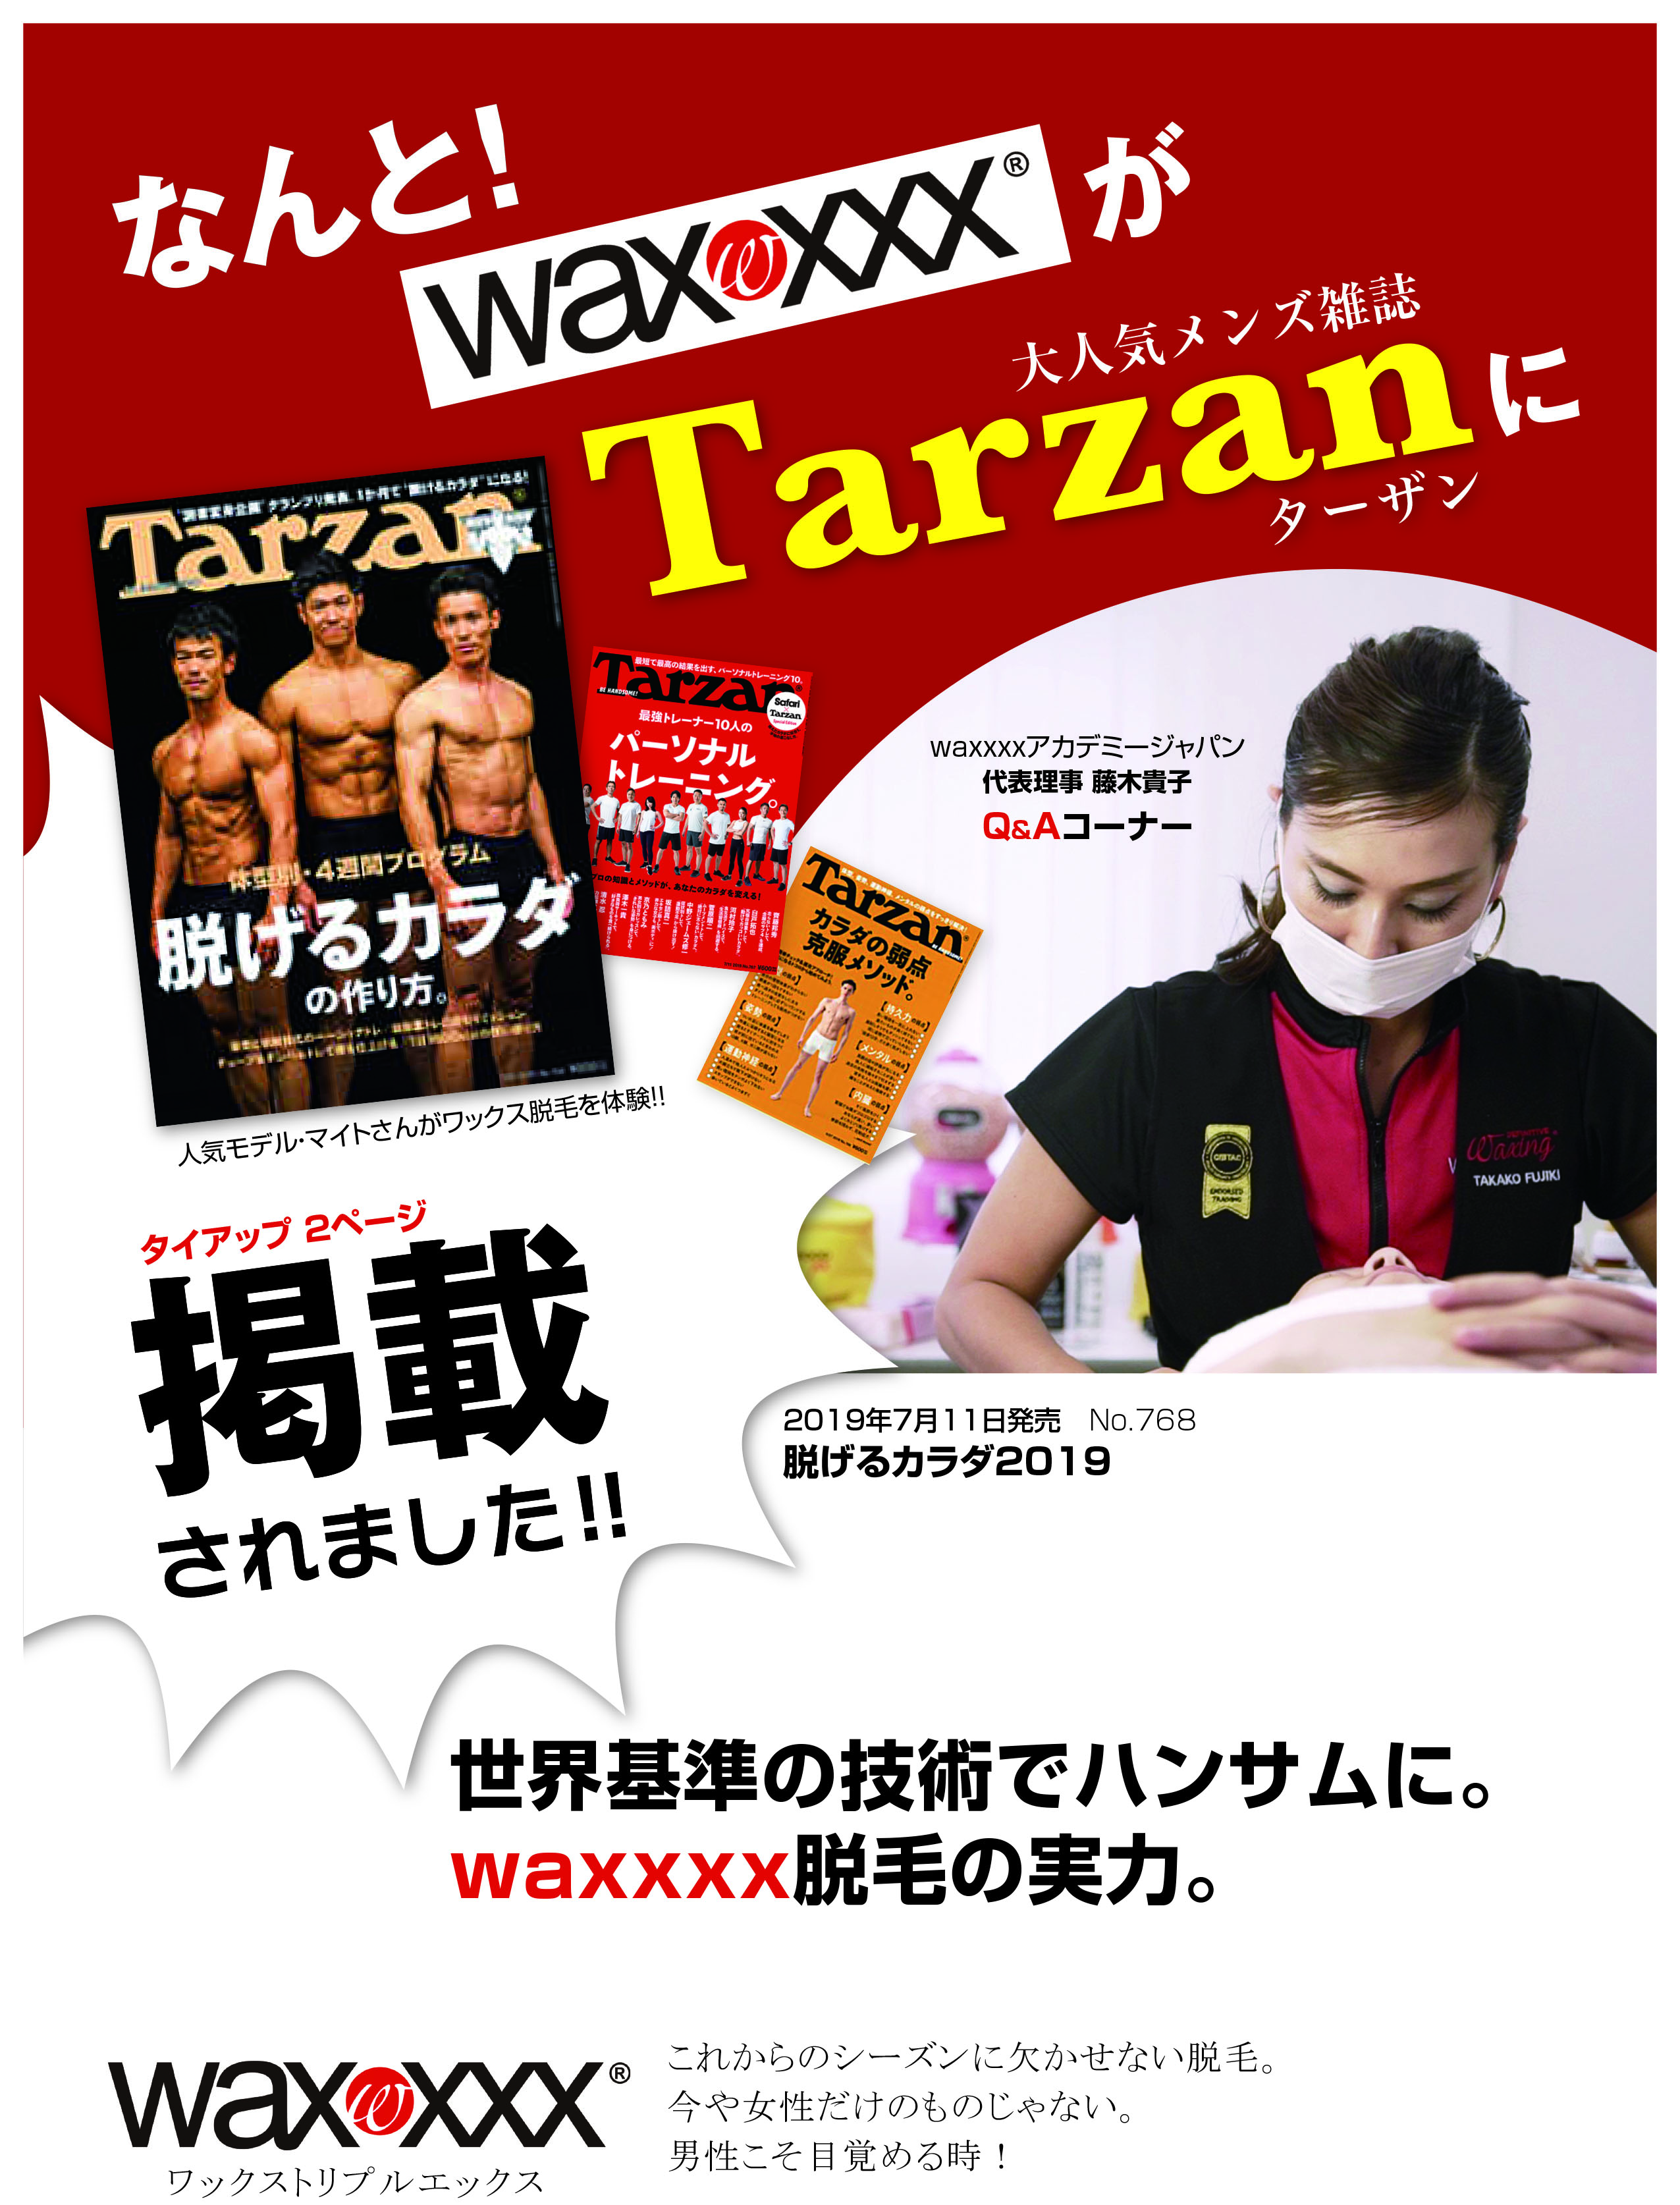 Tarzan7月25日号に｢WAXXXX｣が掲載されました！